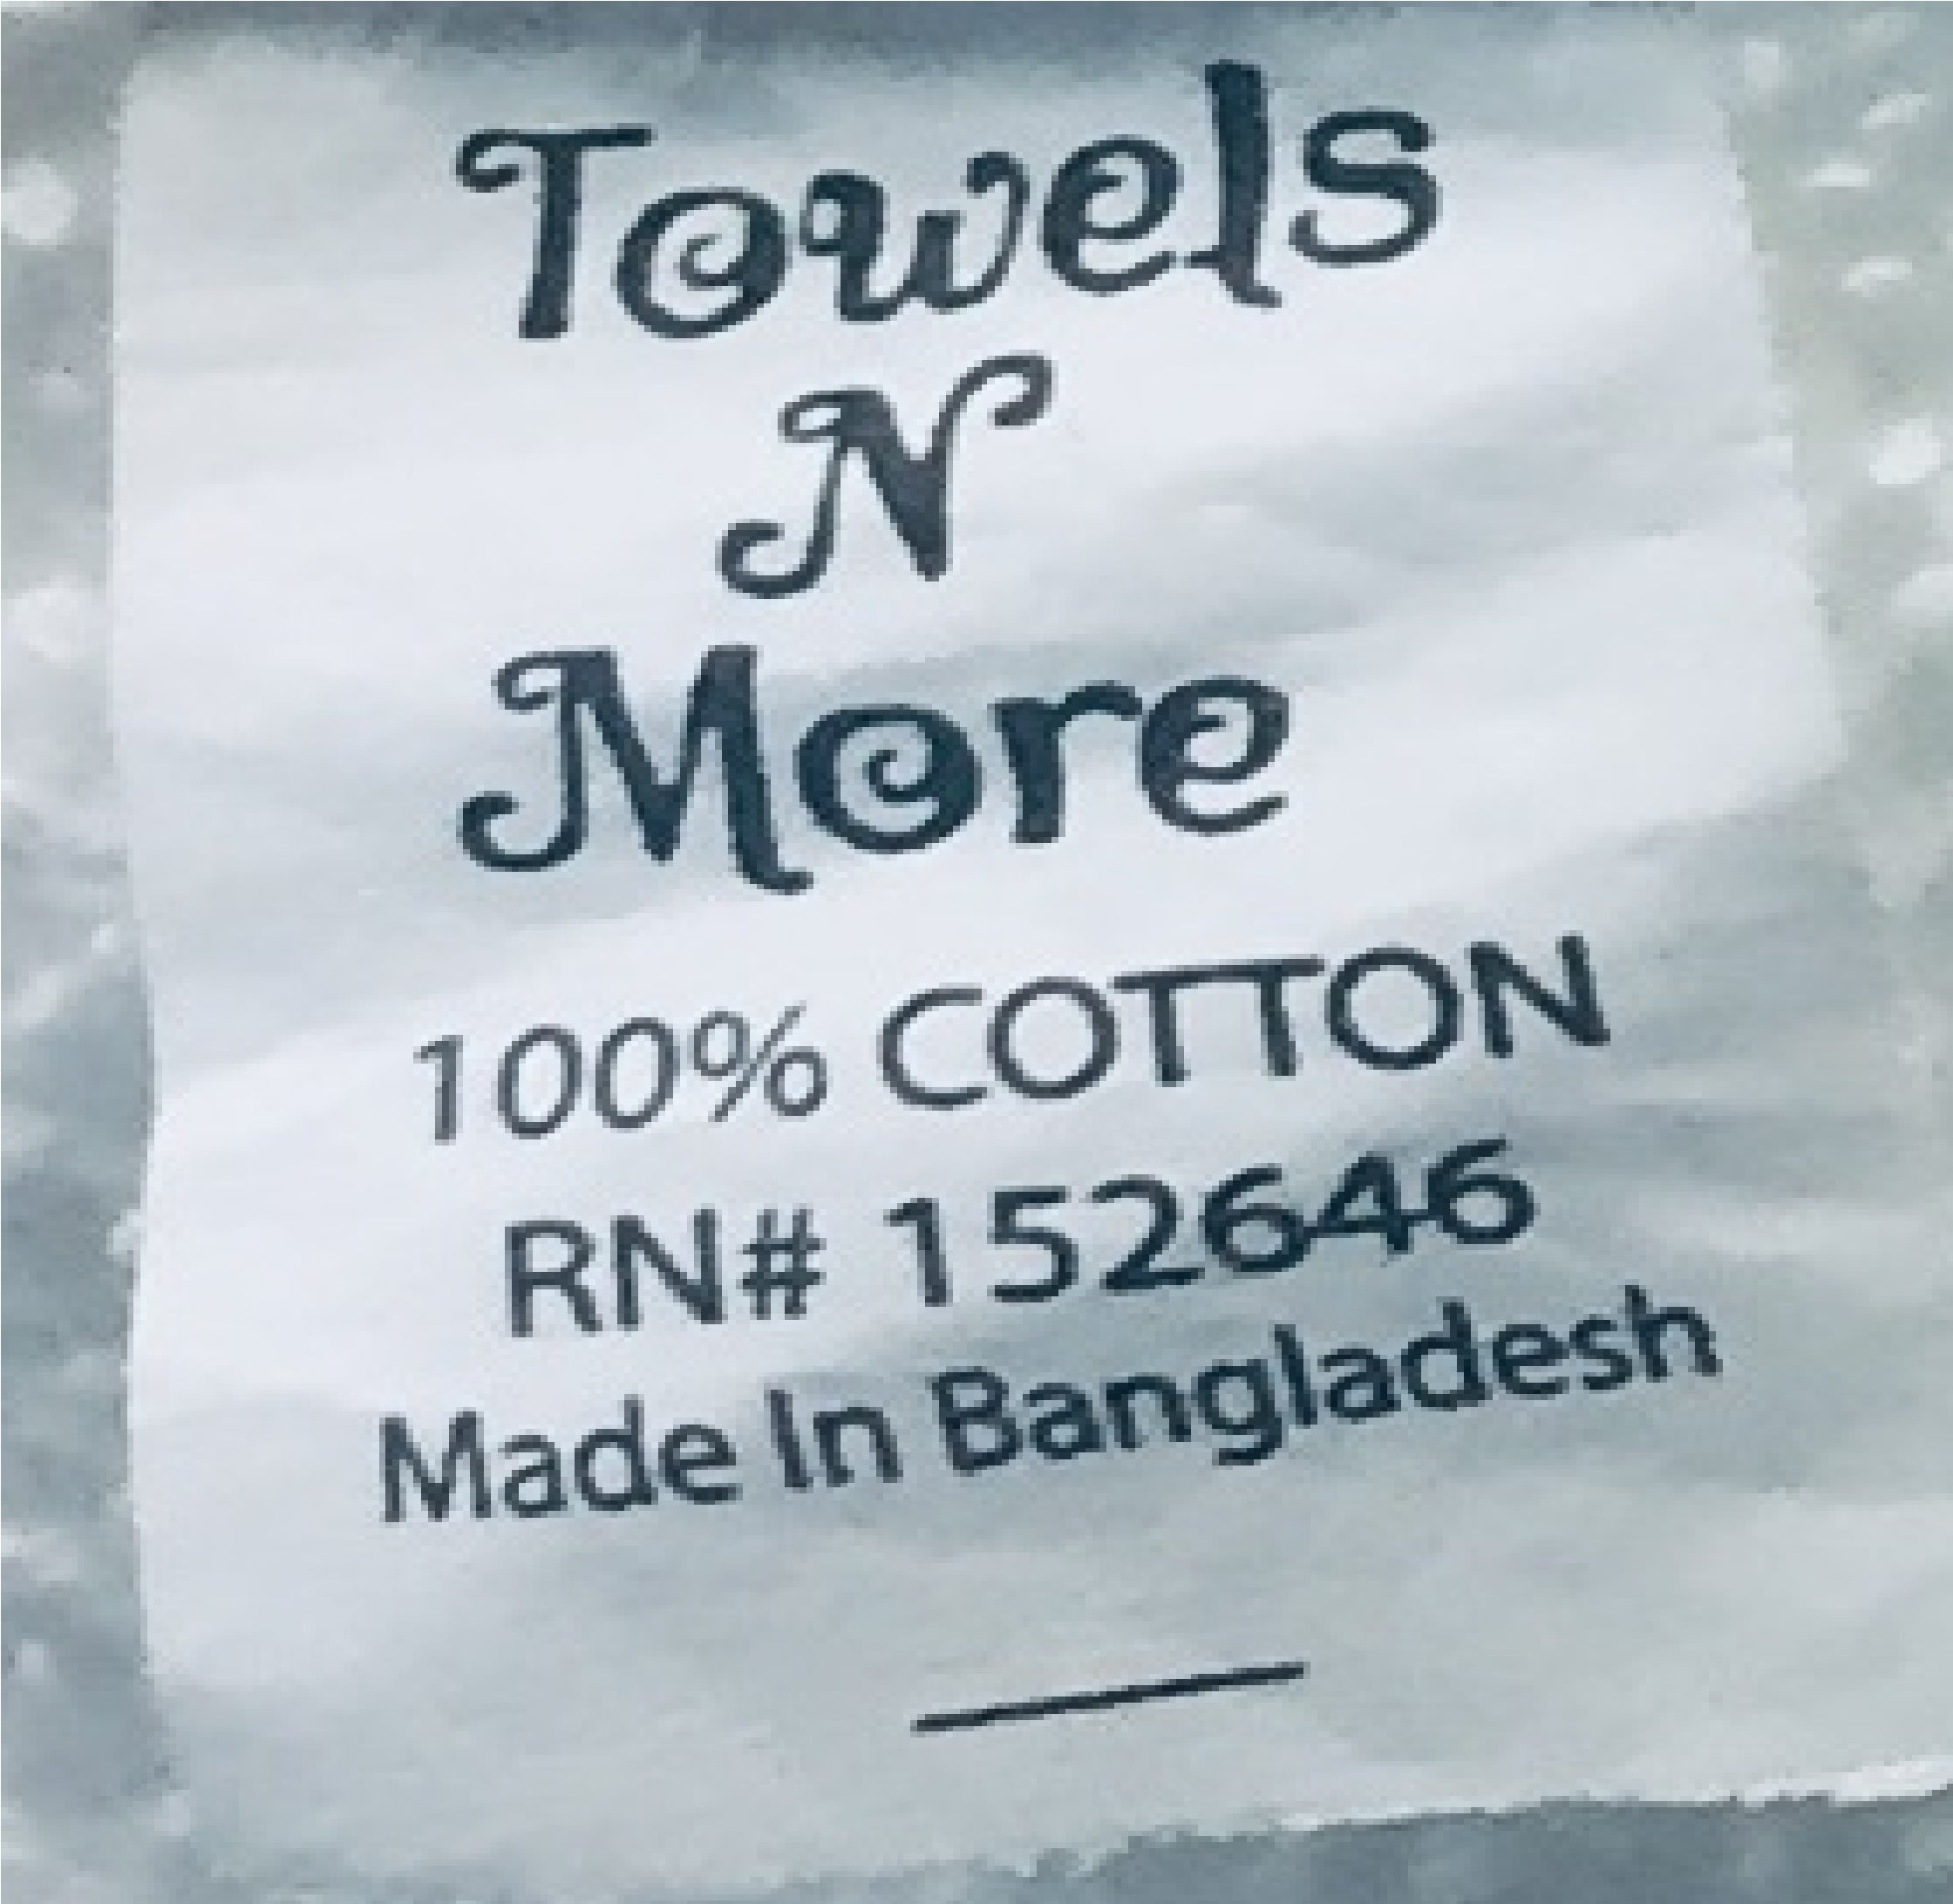 Member's Mark Cotton Bar Mop Towels, 16 x 19 (24 ct.)